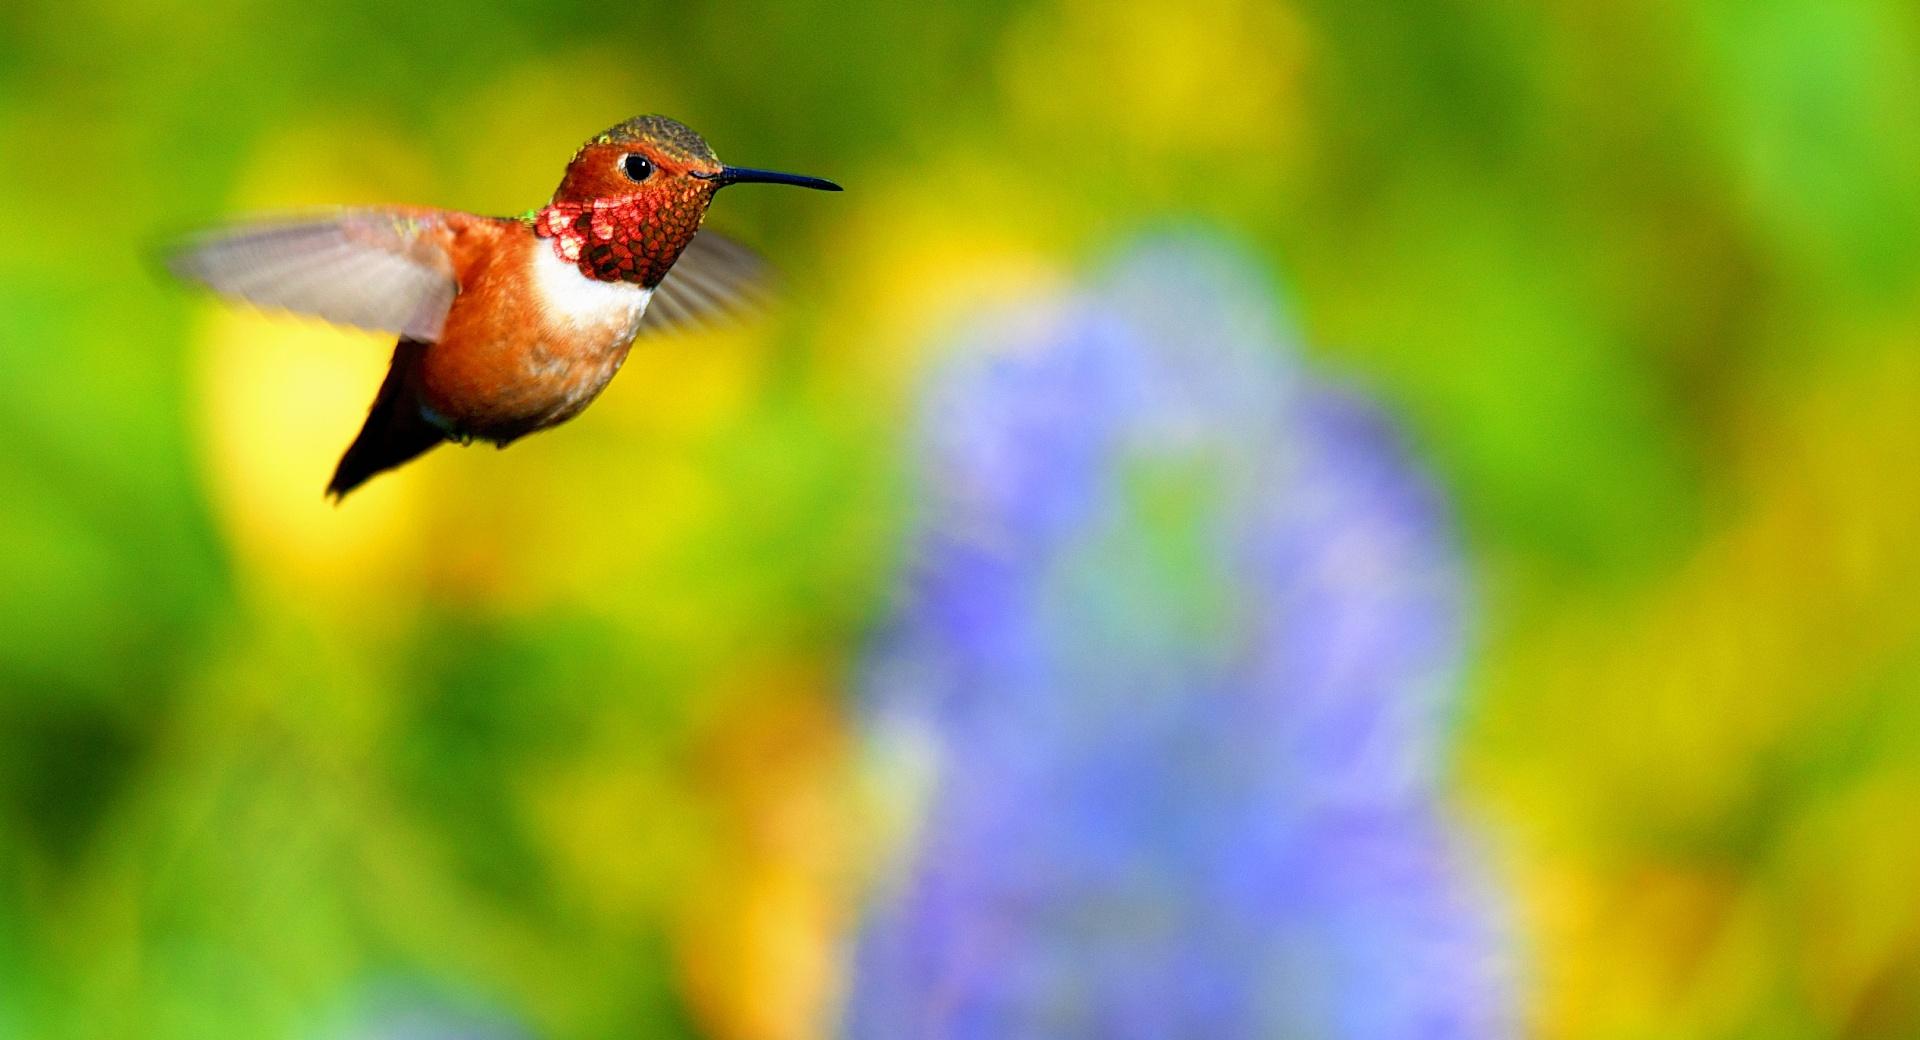 Rufous Hummingbird Flying at 1024 x 1024 iPad size wallpapers HD quality